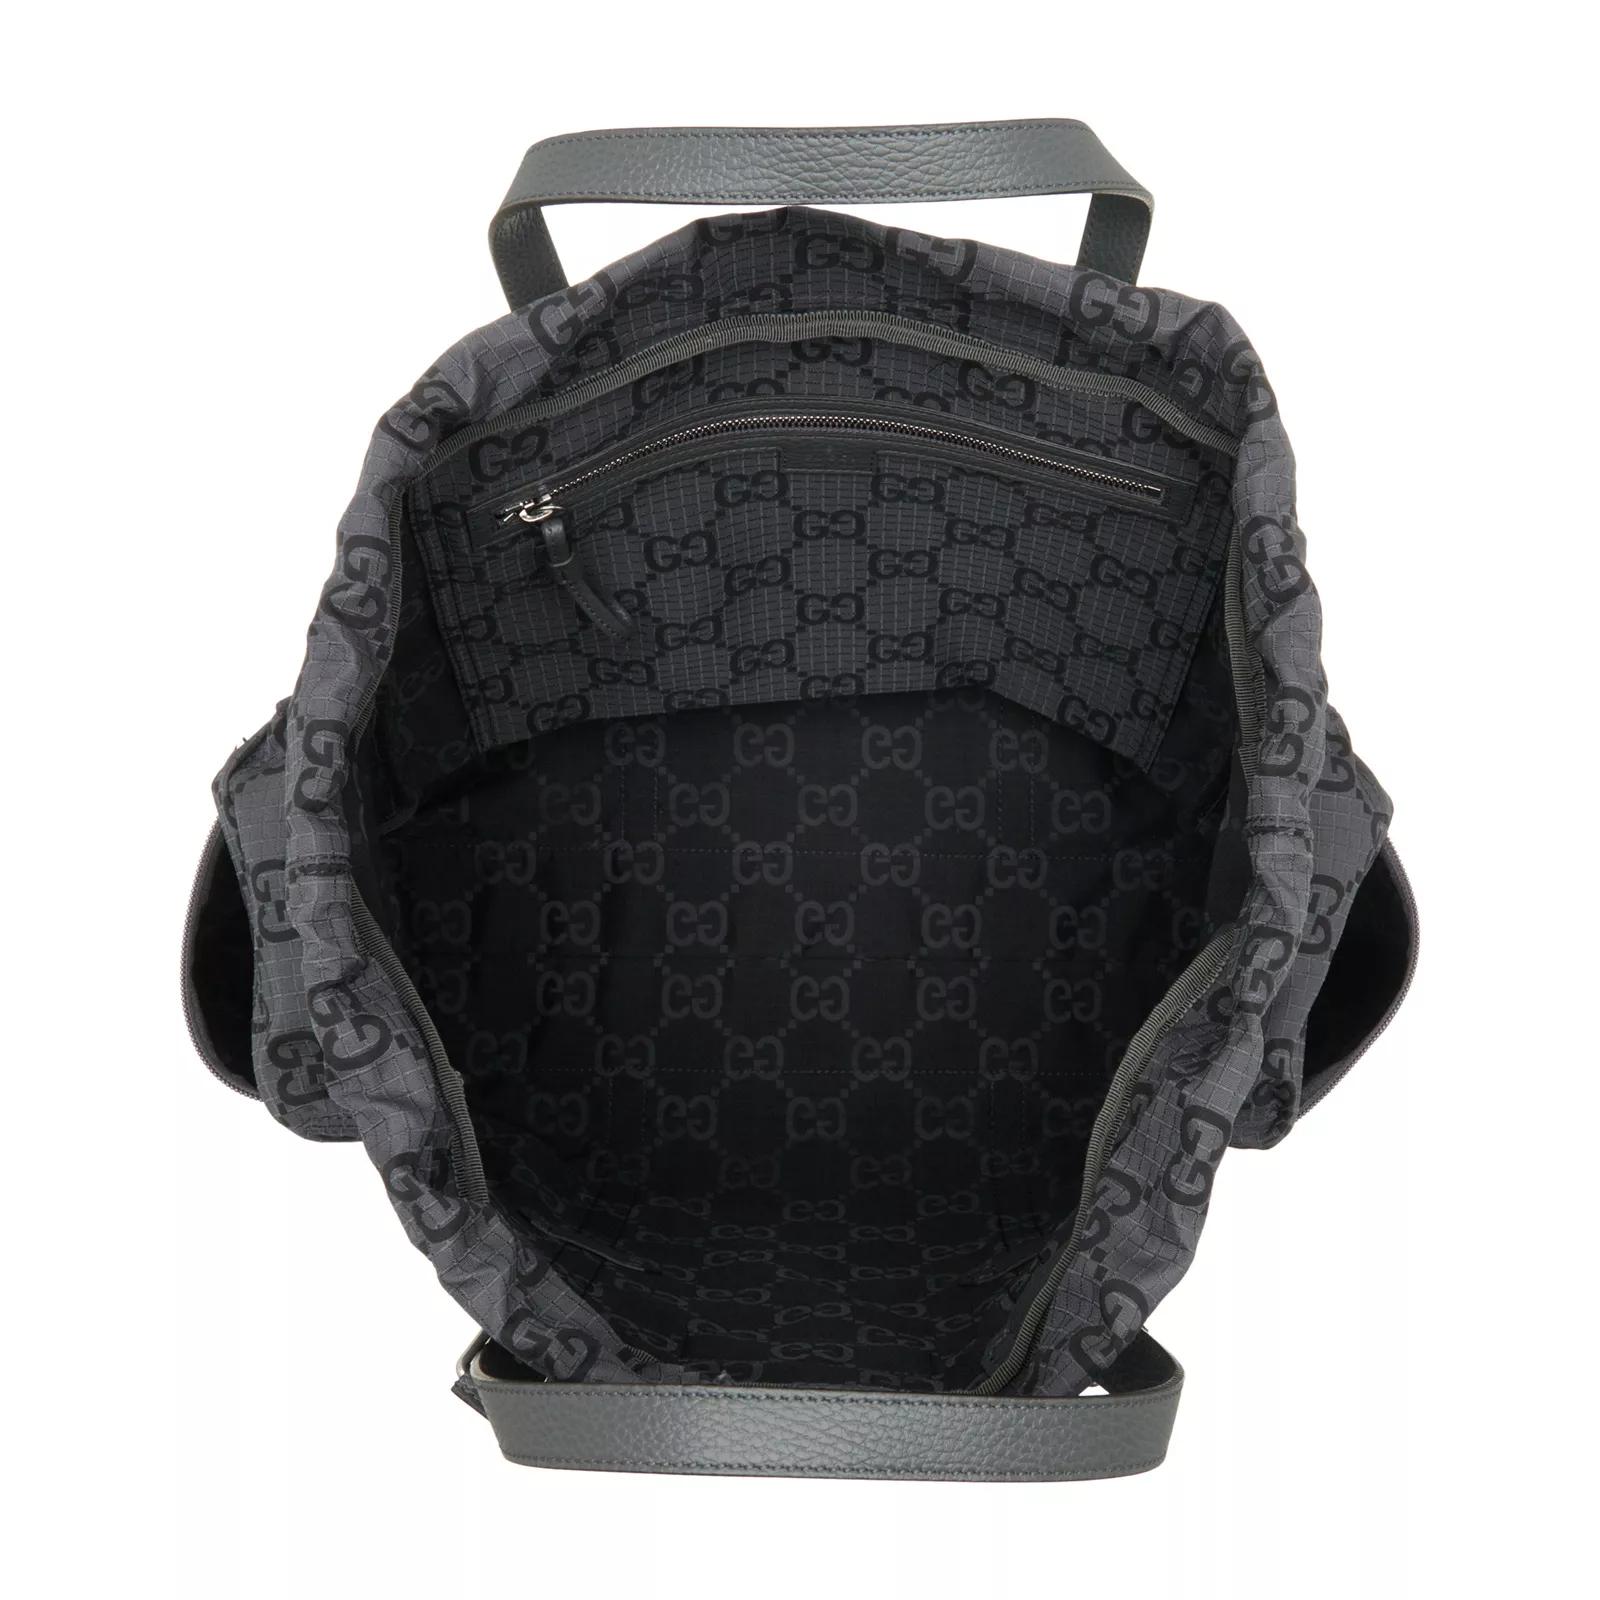 Gucci Totes Medium GG Tote Bag in grijs